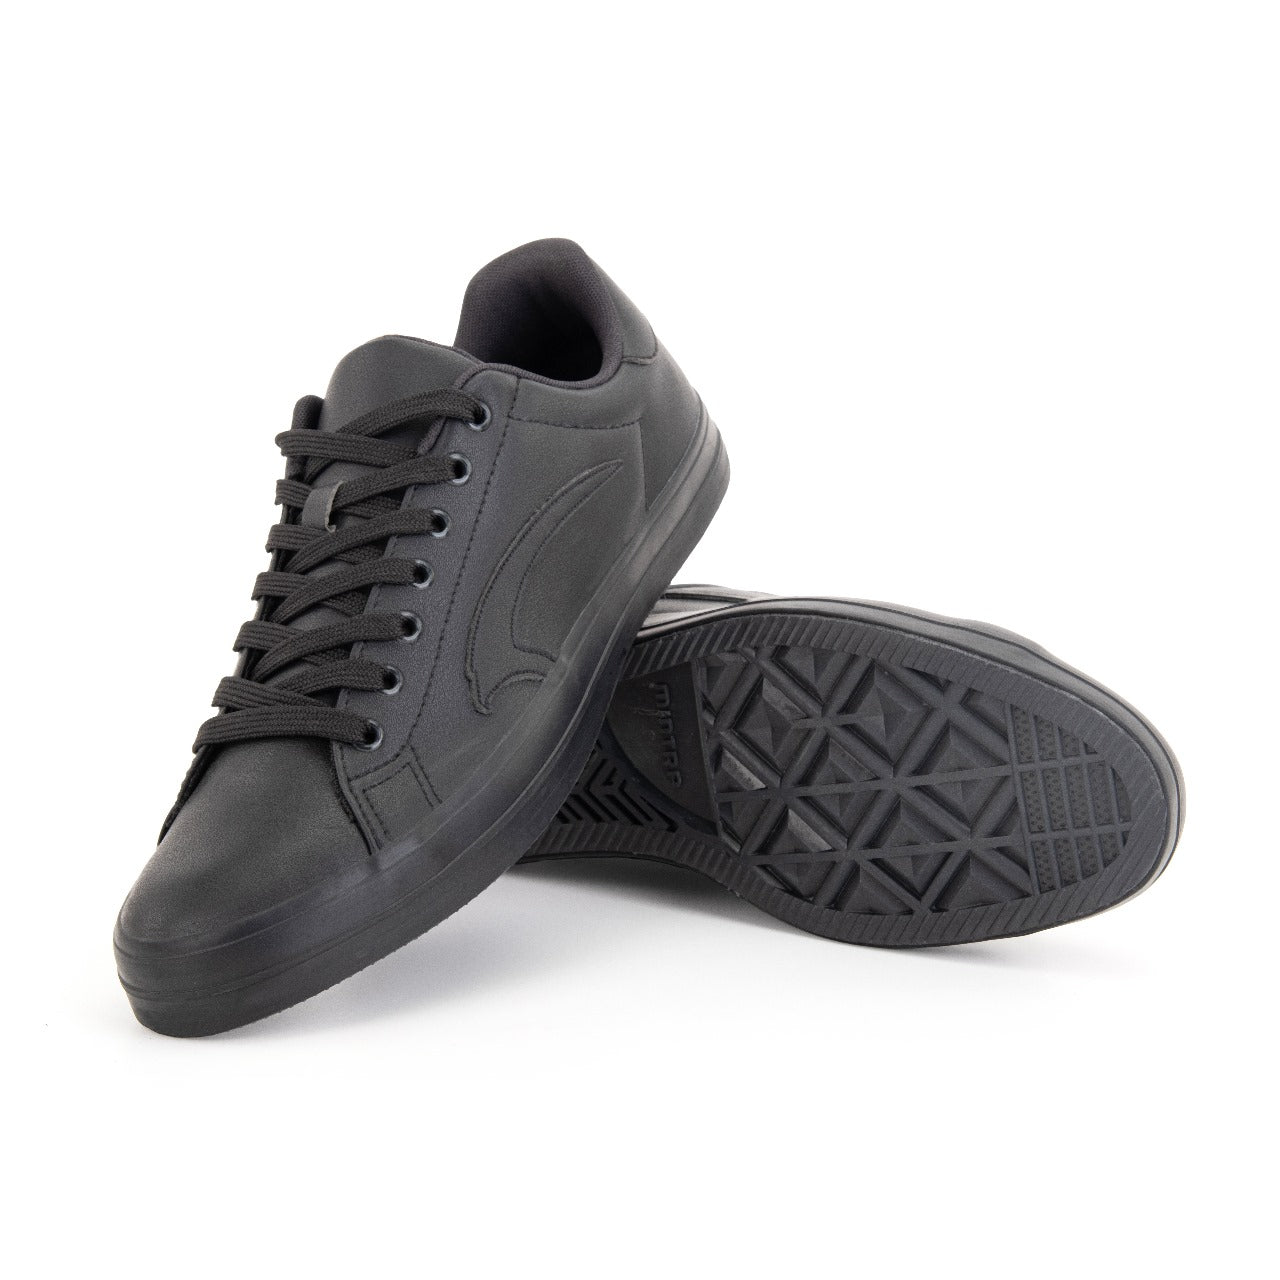 Mintra Urban Shoes For Men, Black